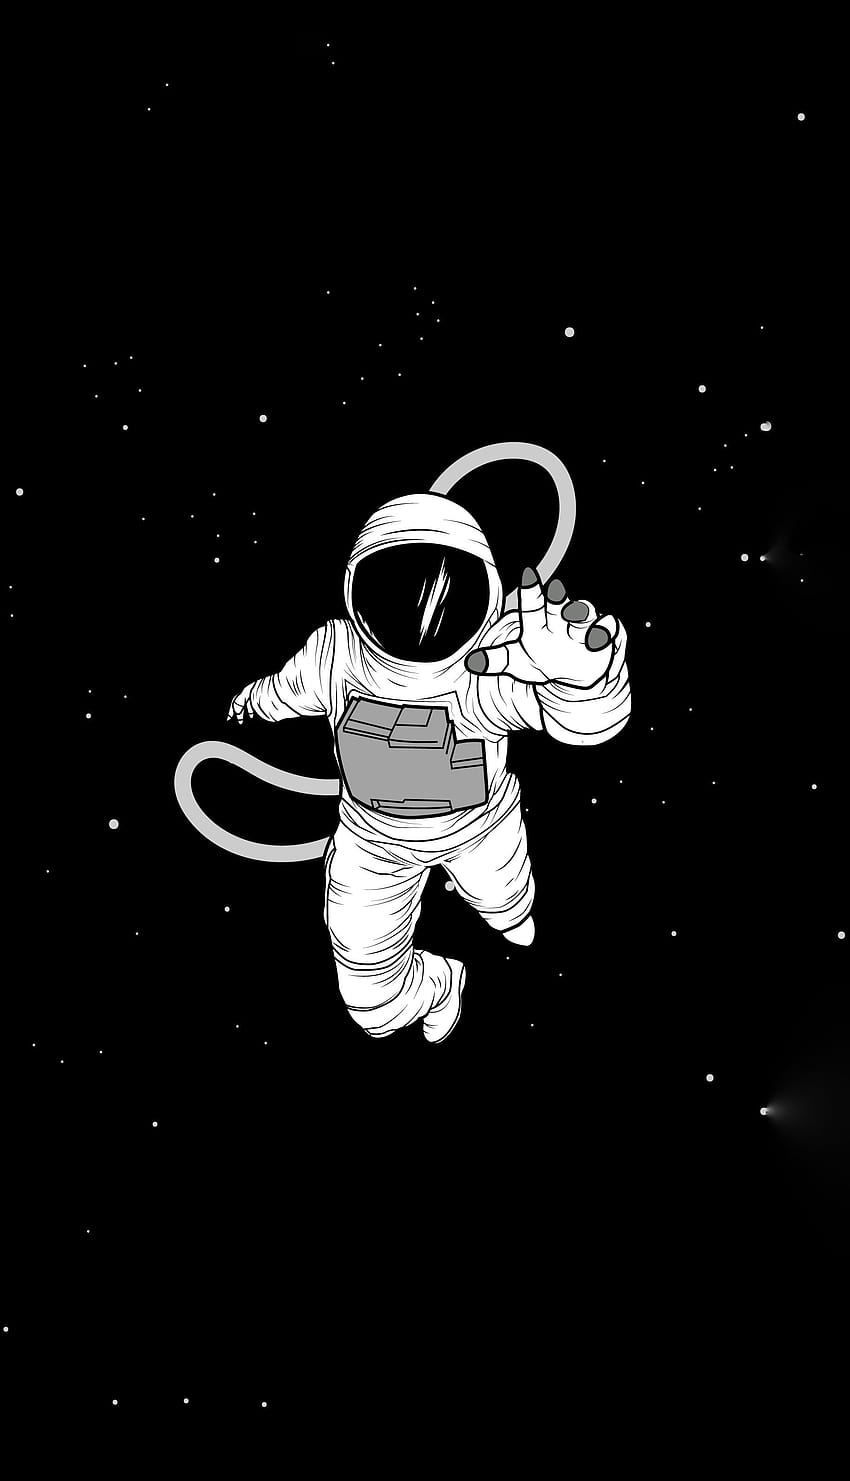 THEME] DYNAMIC SPACEMAN, astronaut amoled dark mode HD phone wallpaper